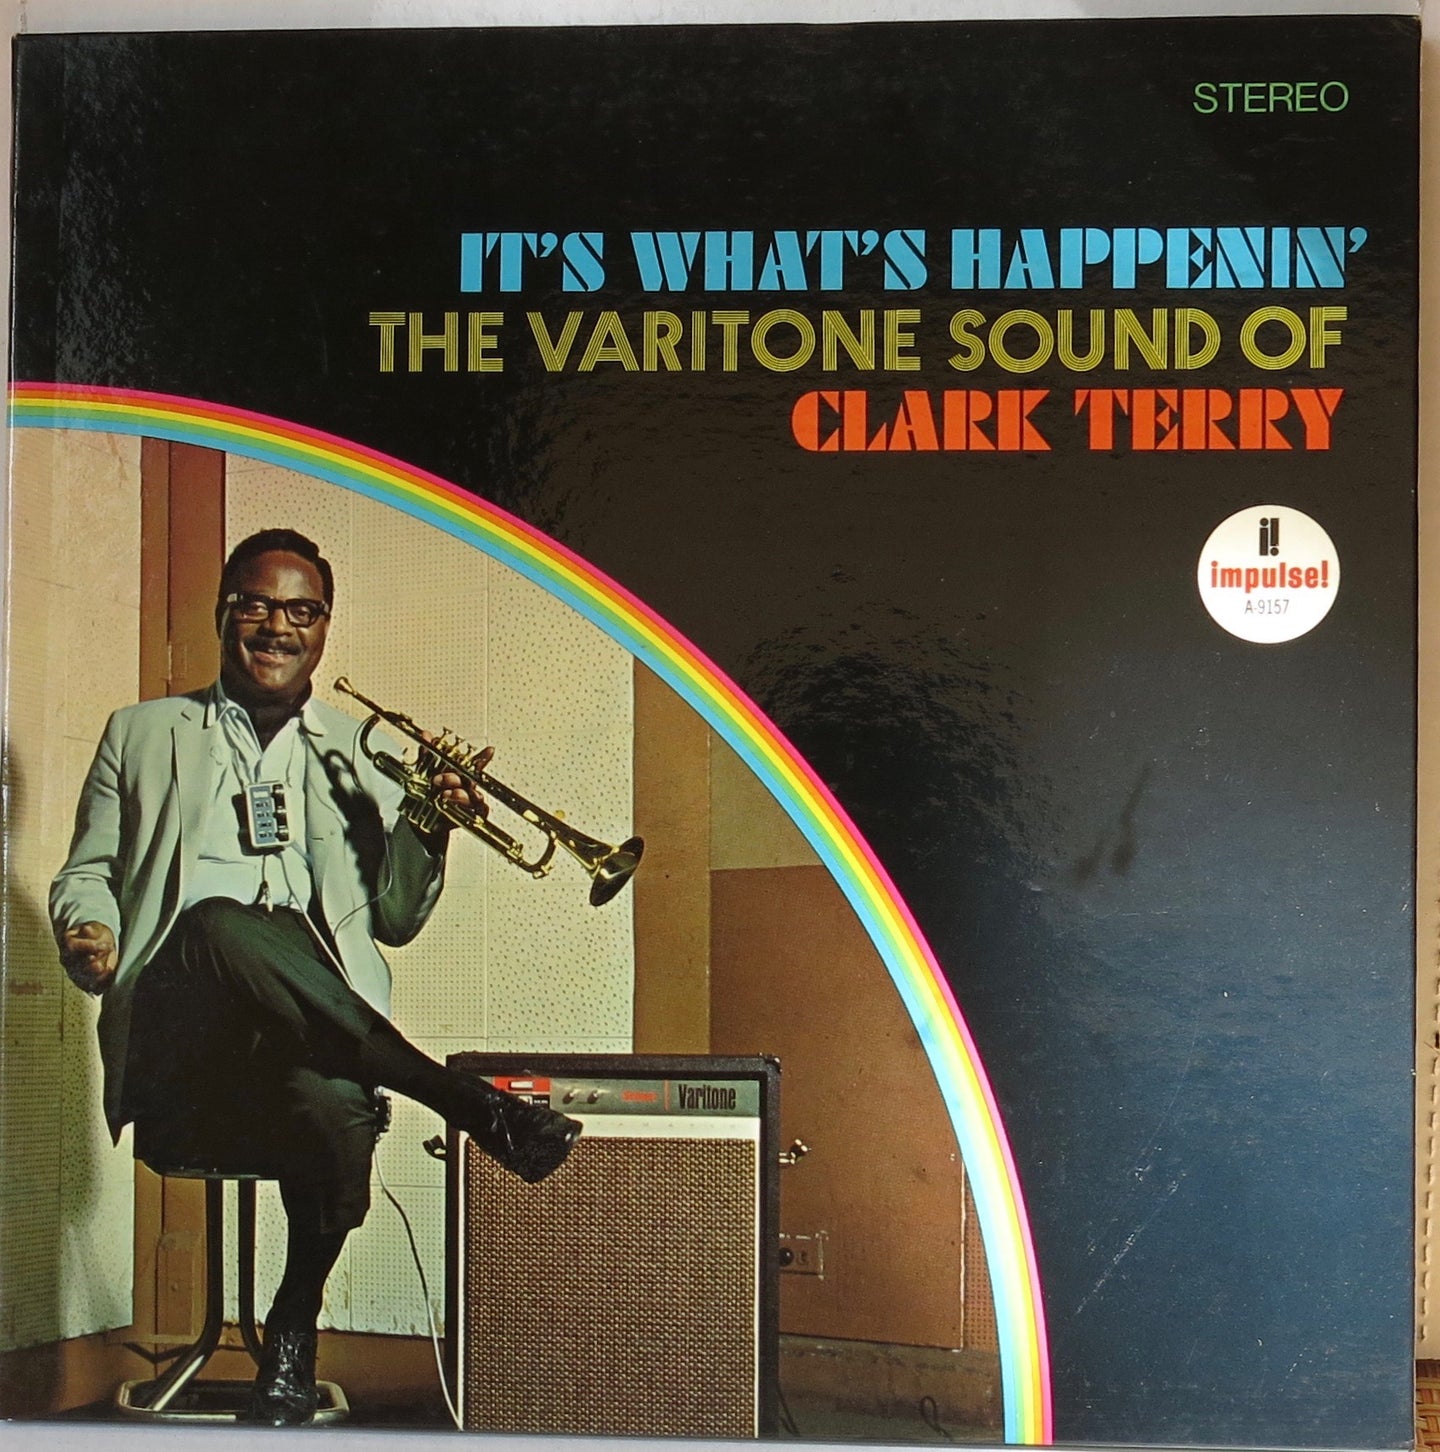 Clark Terry - It's What's Happenin' The Varitone Sound of Clark Terry - Impulse